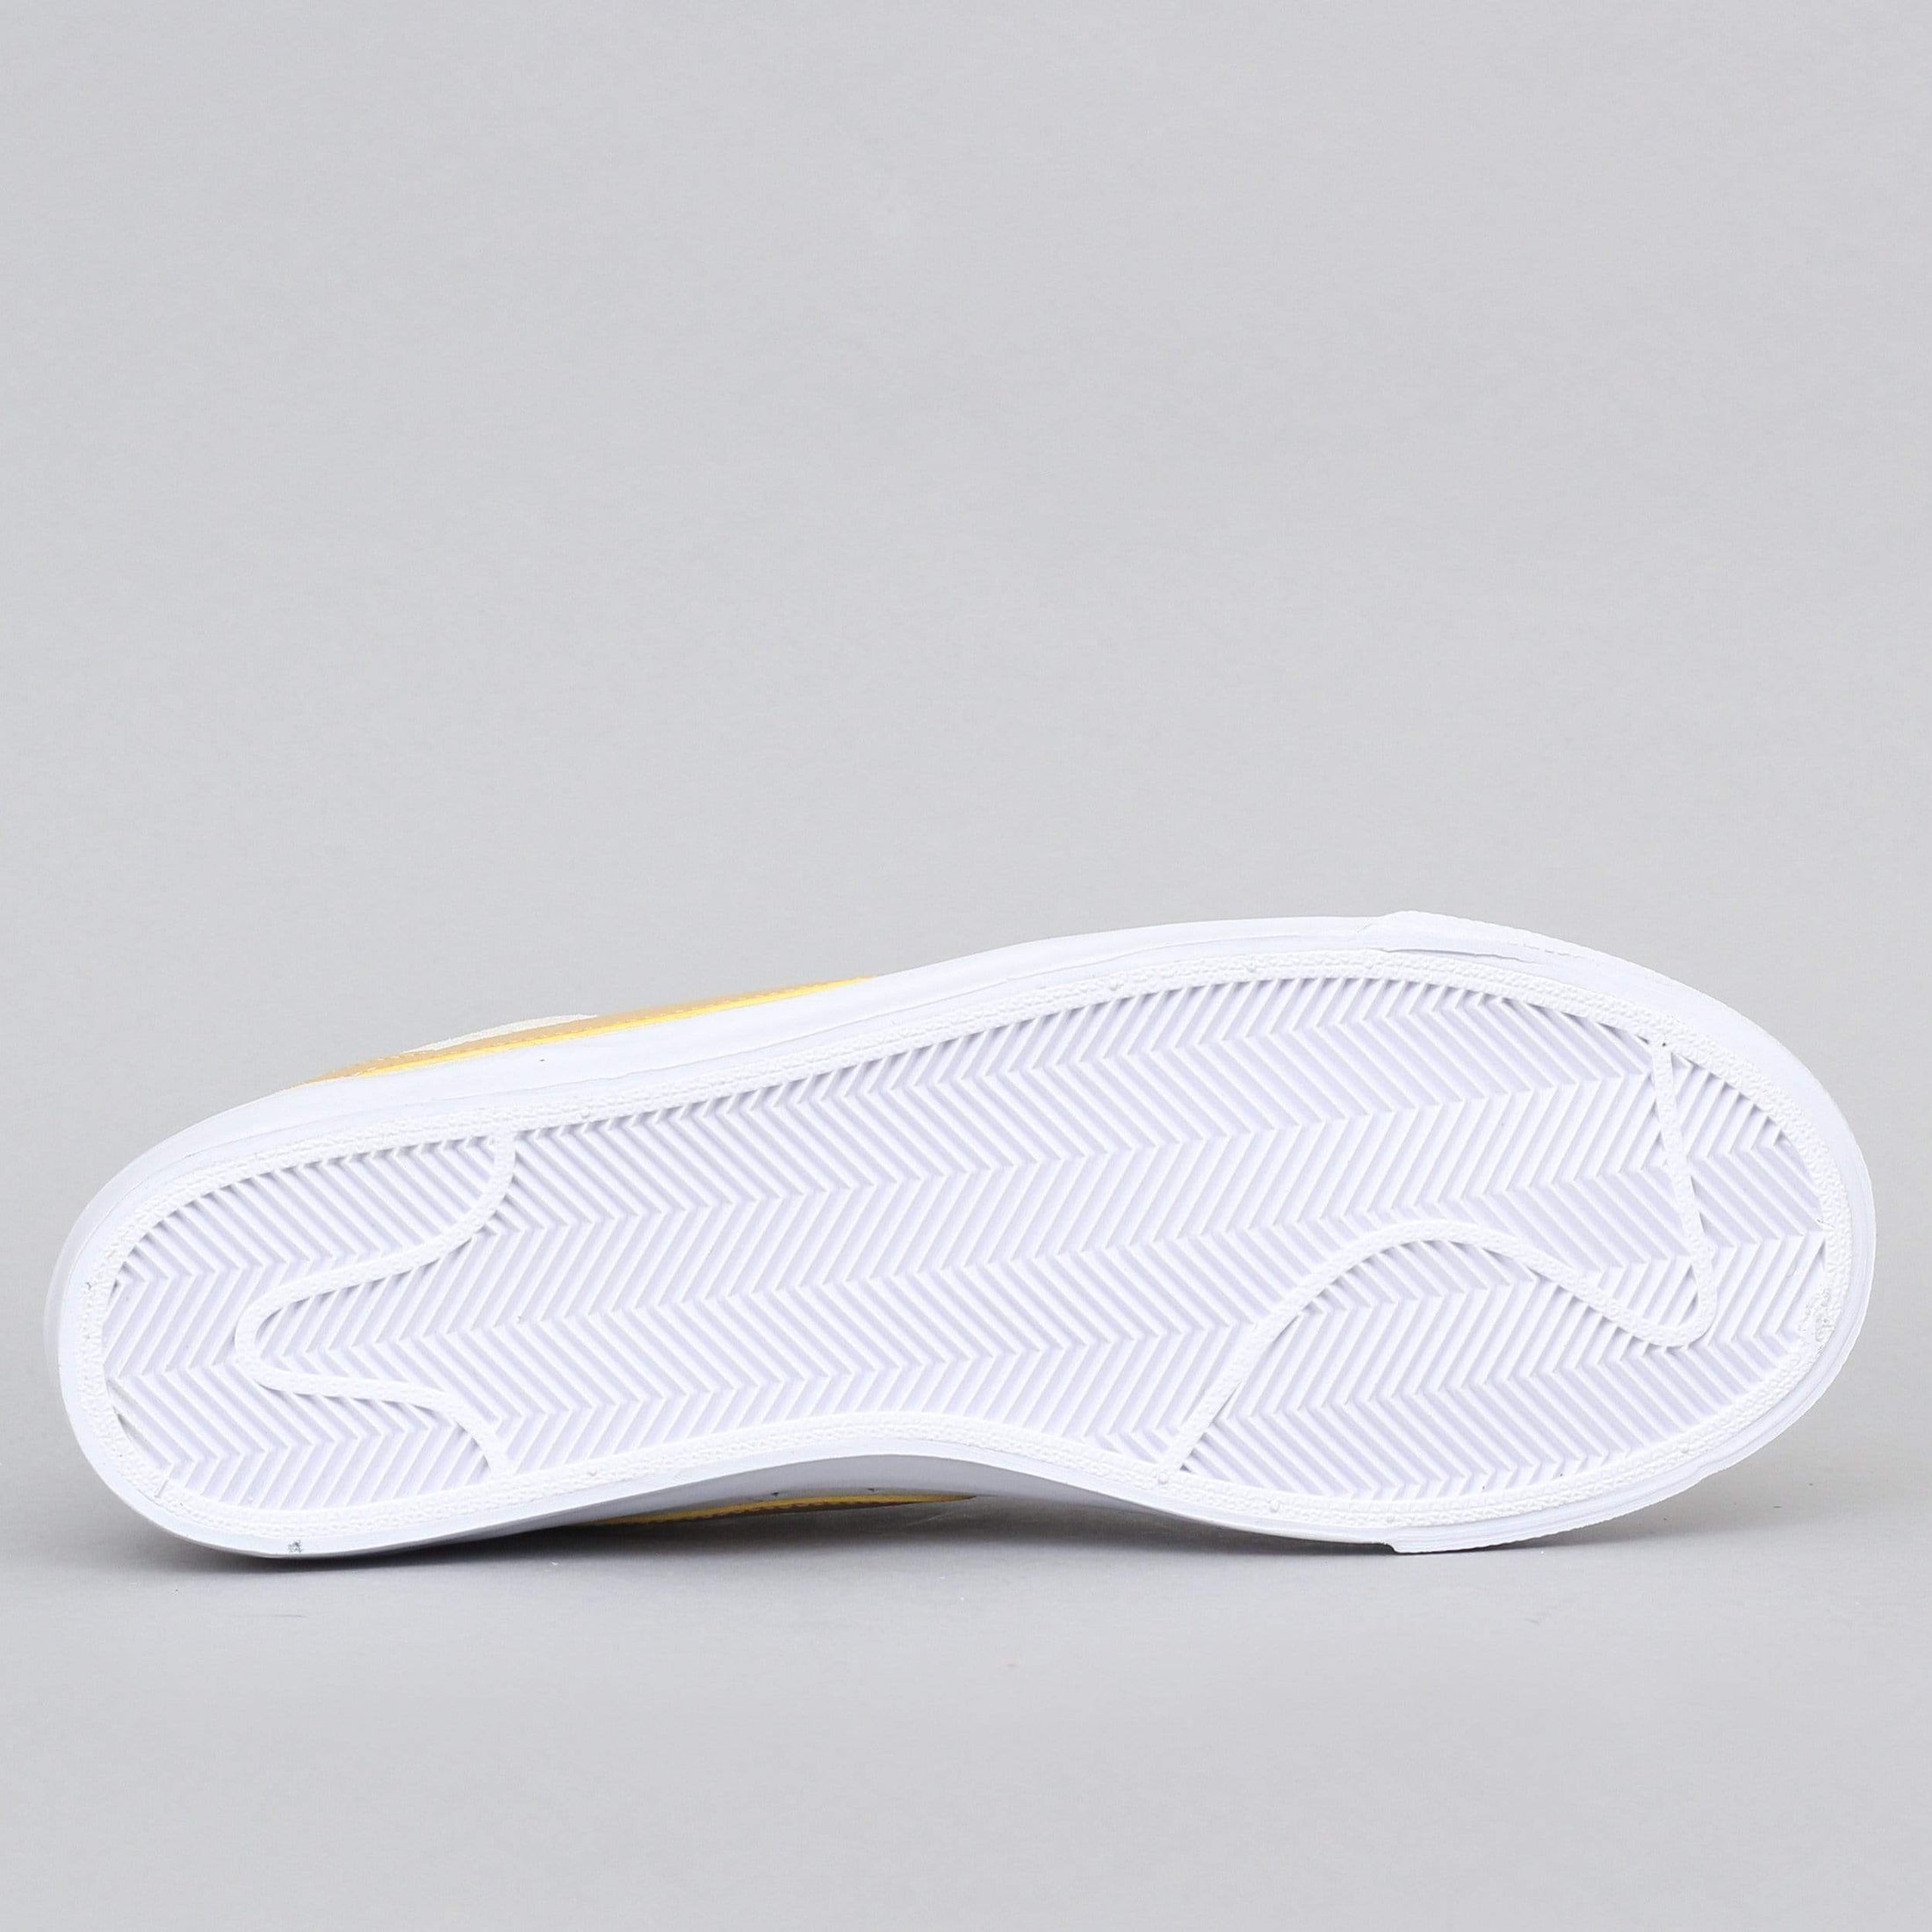 Nike SB Blazer Low GT Shoes White / Club Gold - White - Light Thistle